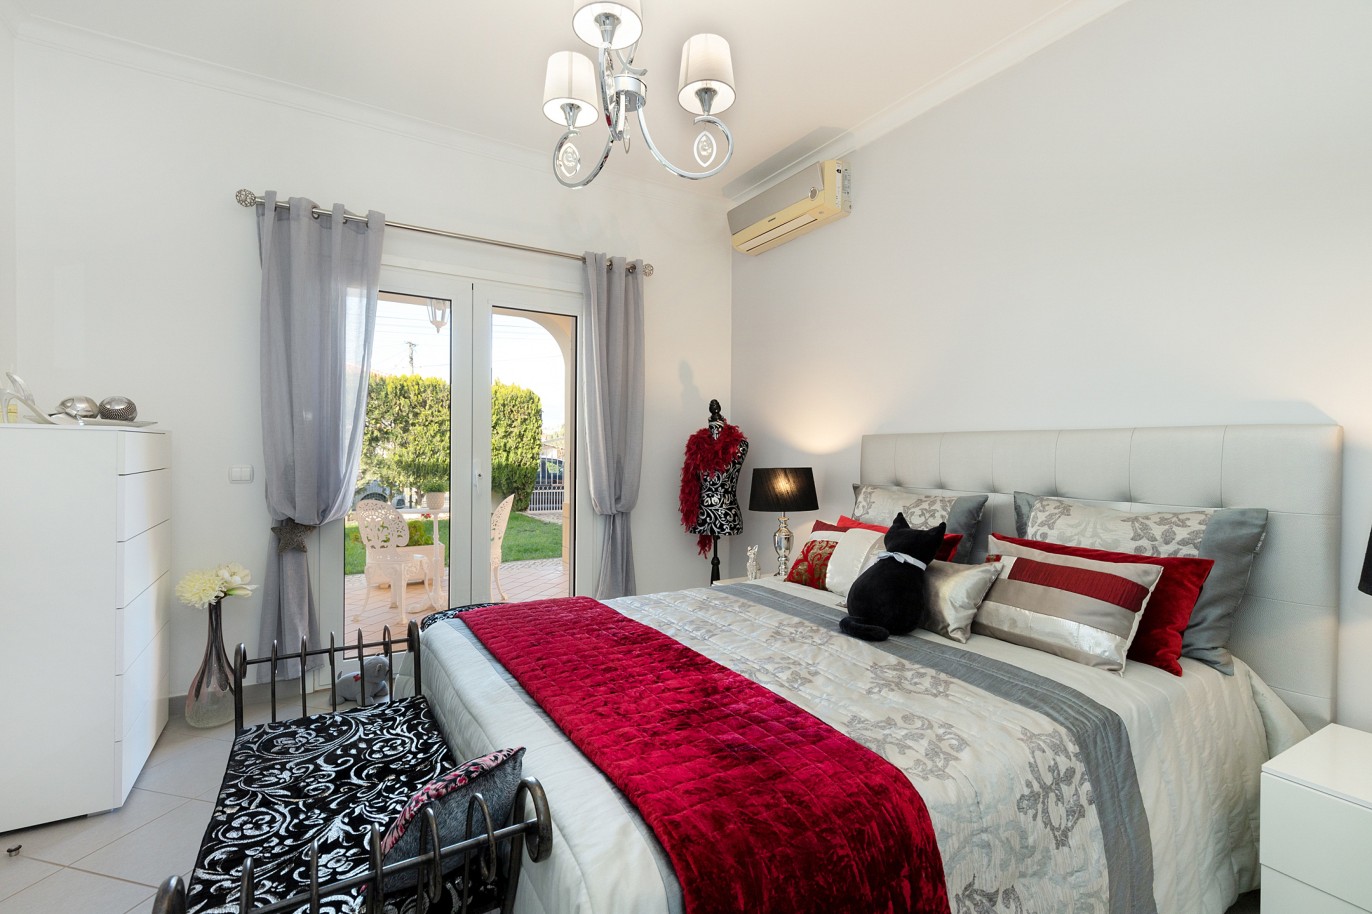 Fantastic 3 bedroom villa with pool, for sale in Algoz, Algarve_215661